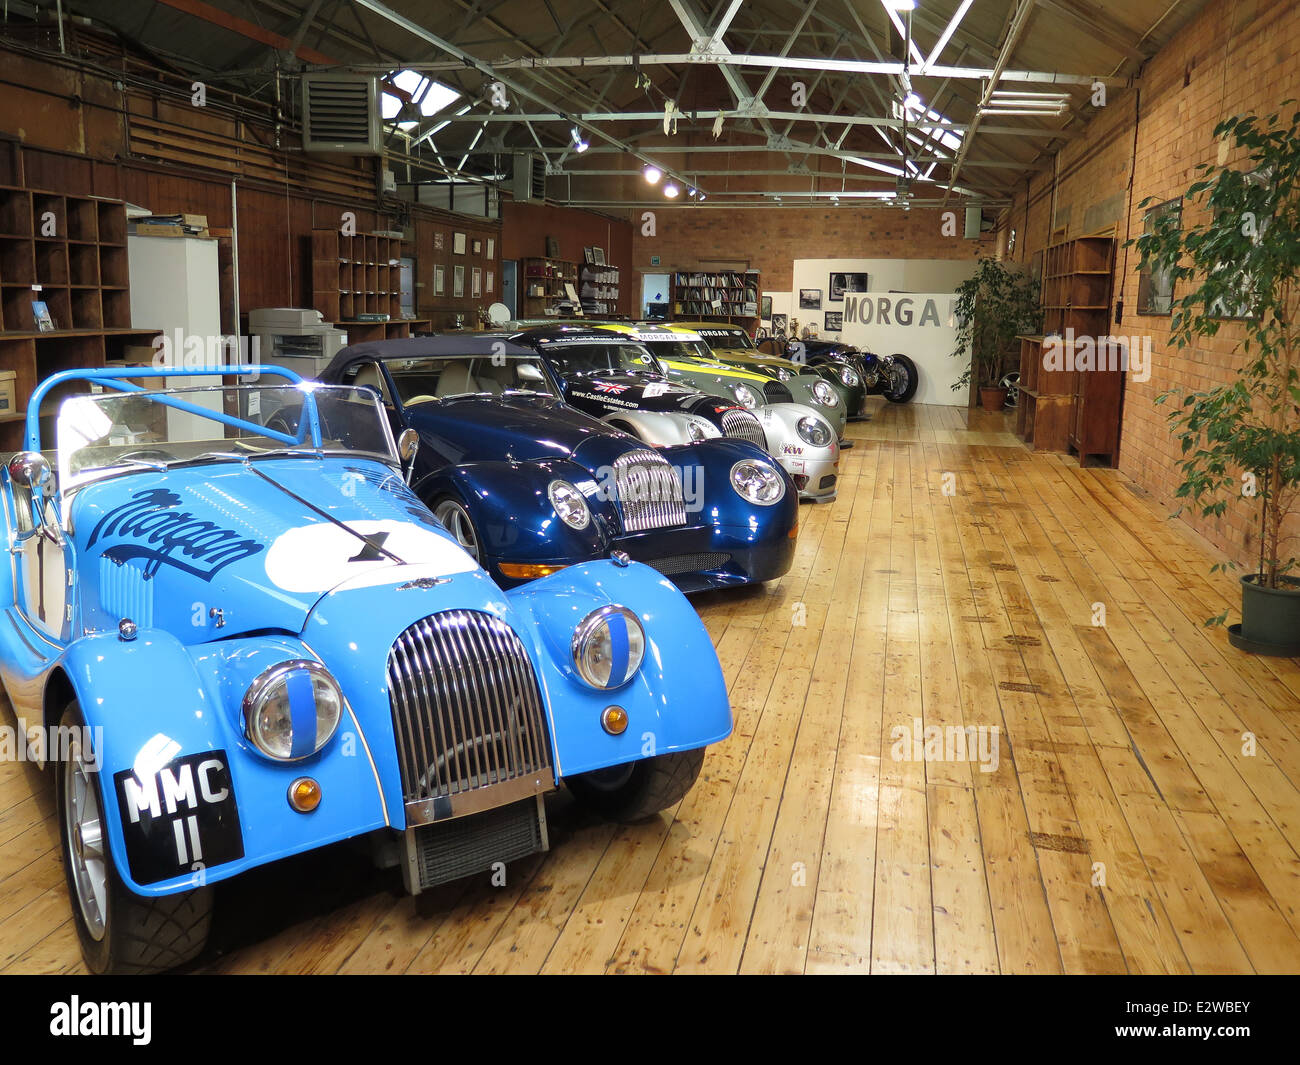 Showroom at Morgan Cars in Malvern showing Classic Morgan Plus 8 and Aero Max Cars Stock Photo